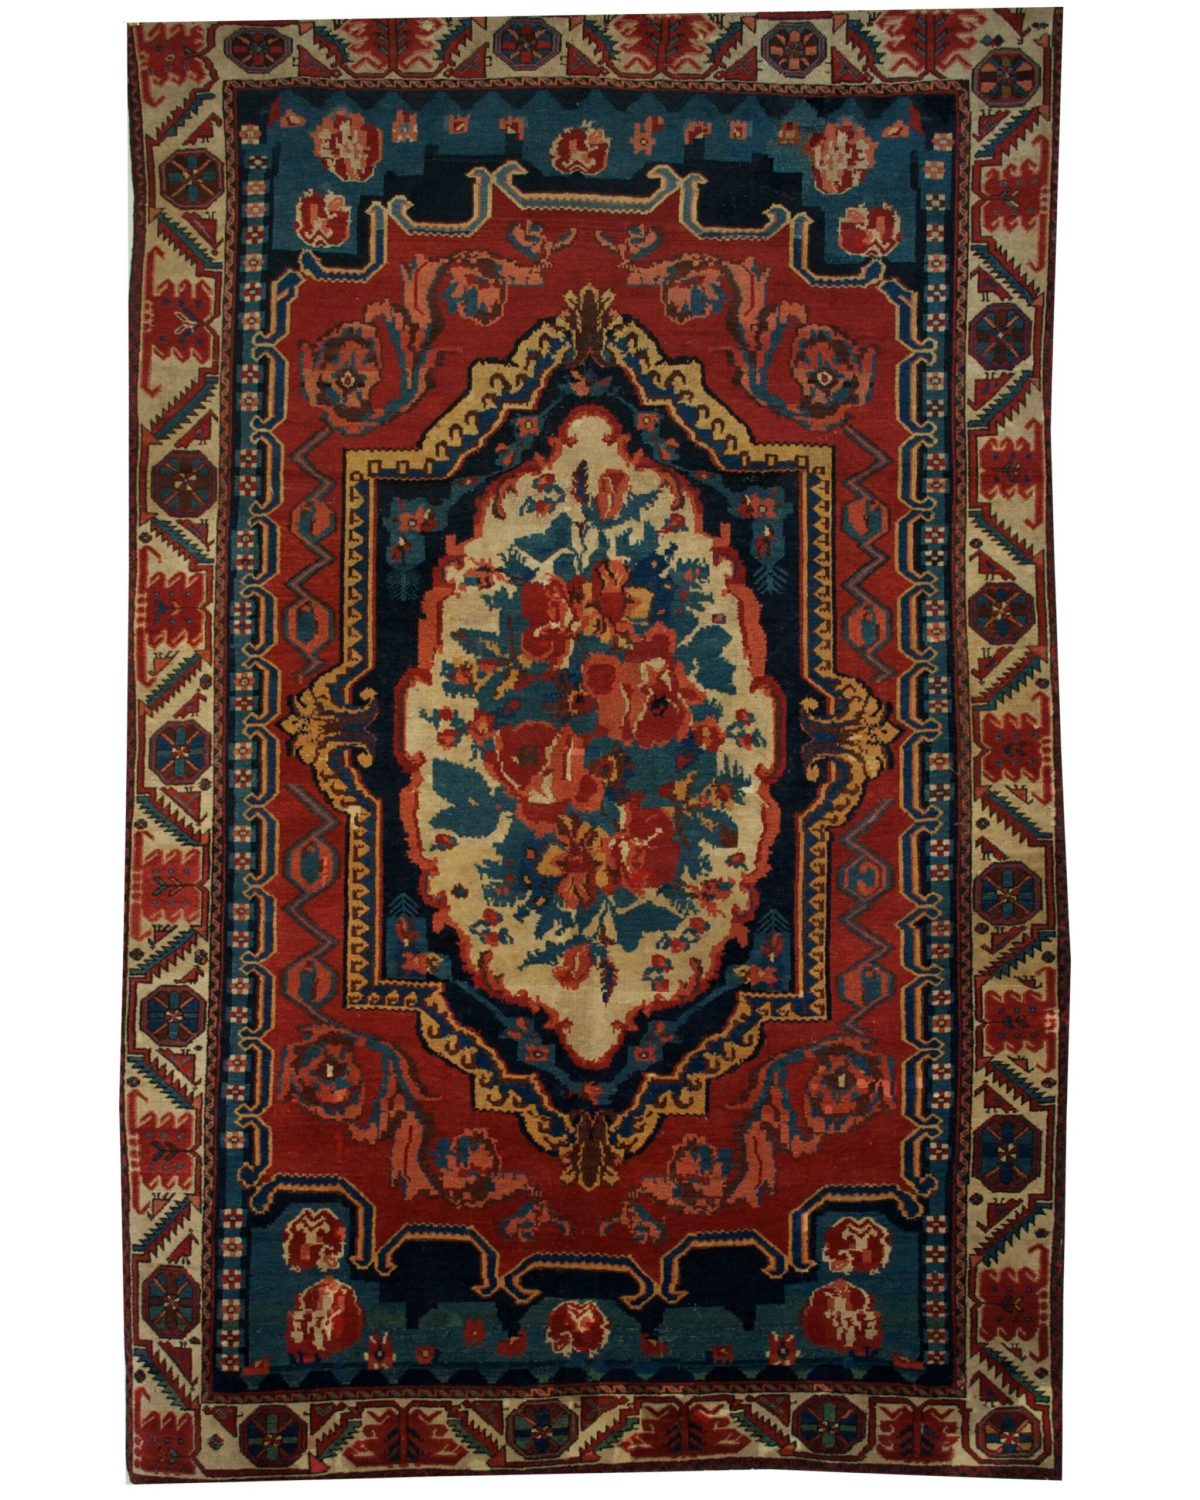 Antique Persian Bakhtiari 5' 8" x 8' 11" Handmade Wool Area Rug - Shabahang Royal Carpet